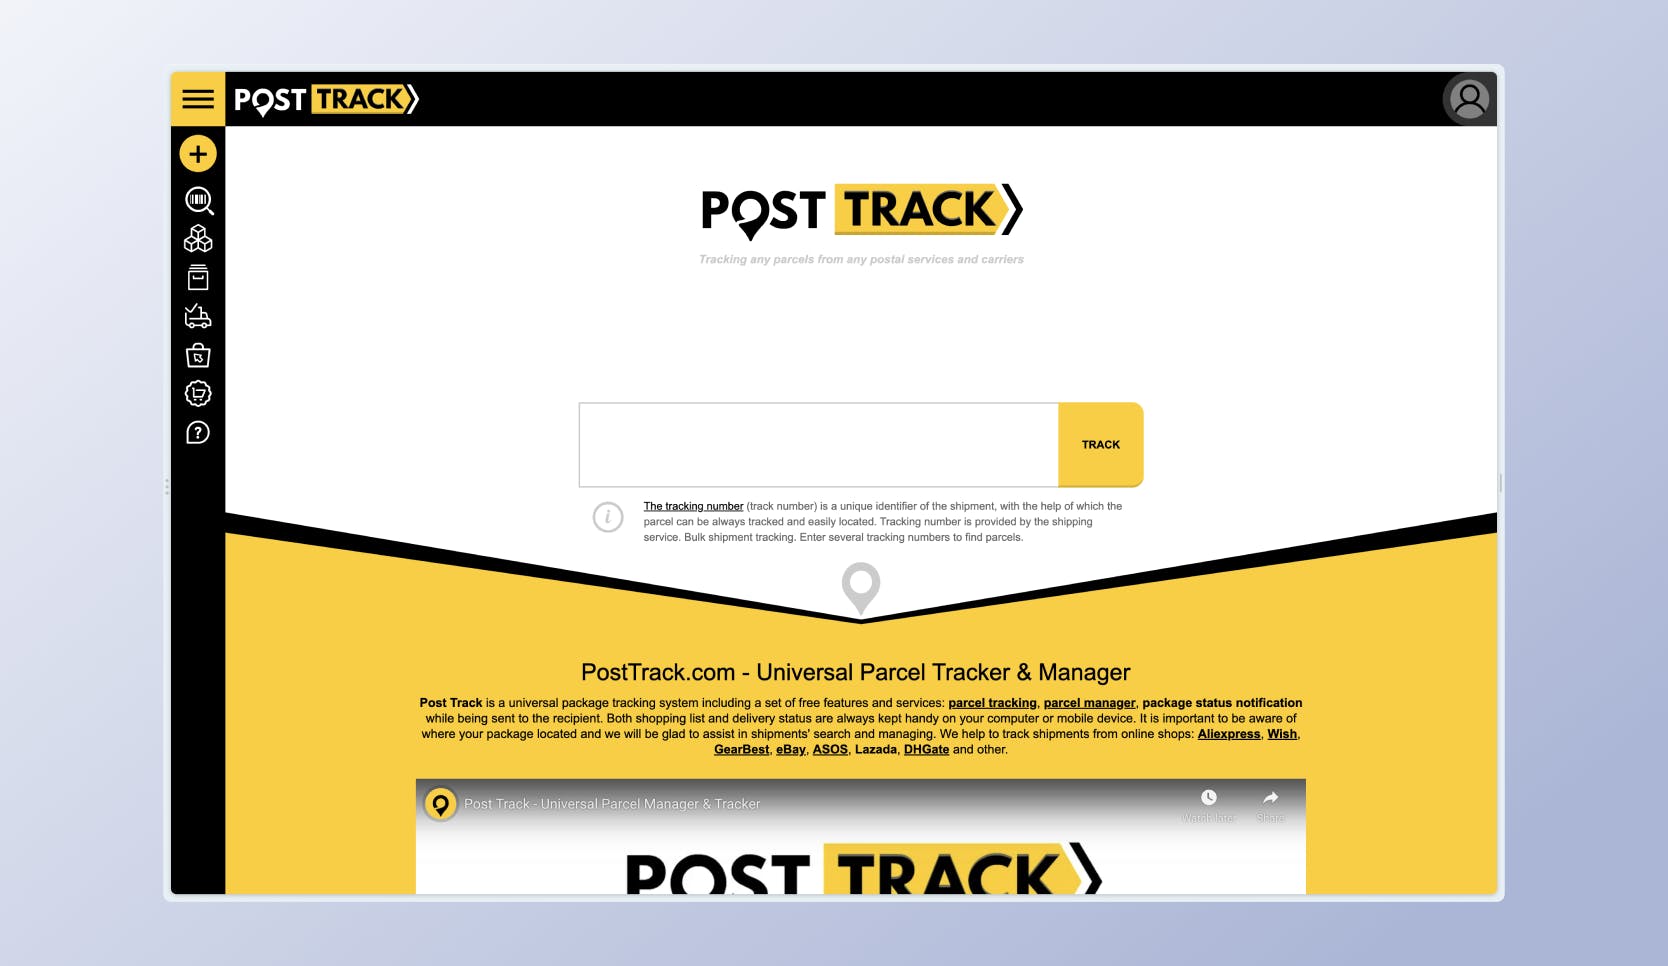 Website landing page for Post Track